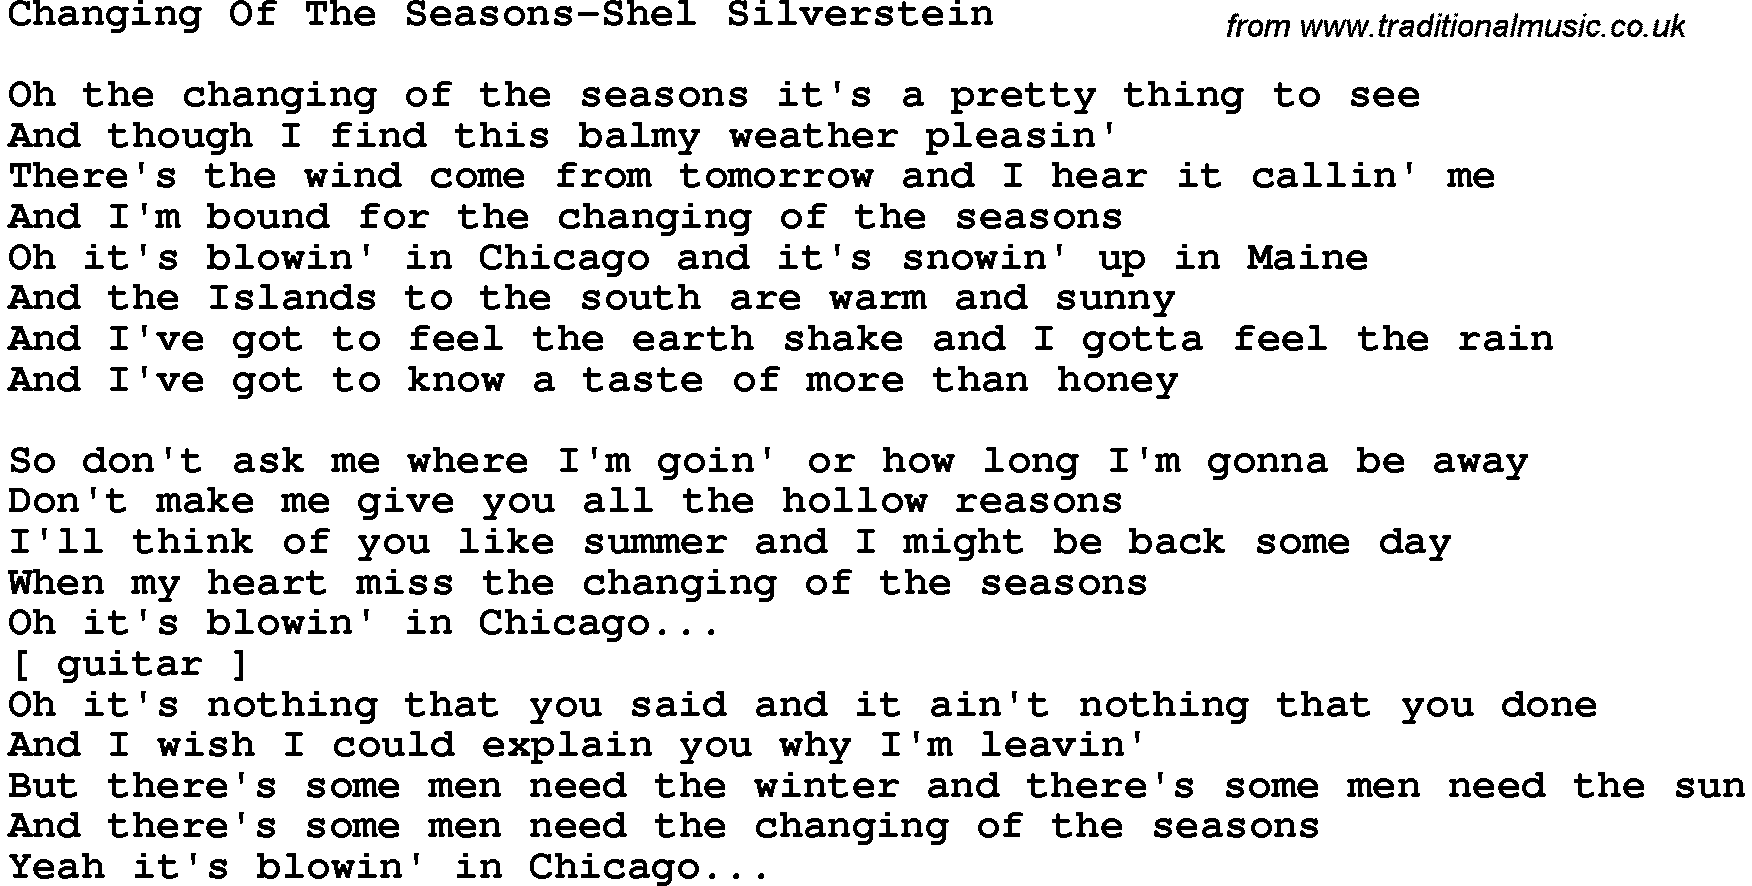 Novelty song: Changing Of The Seasons-Shel Silverstein lyrics